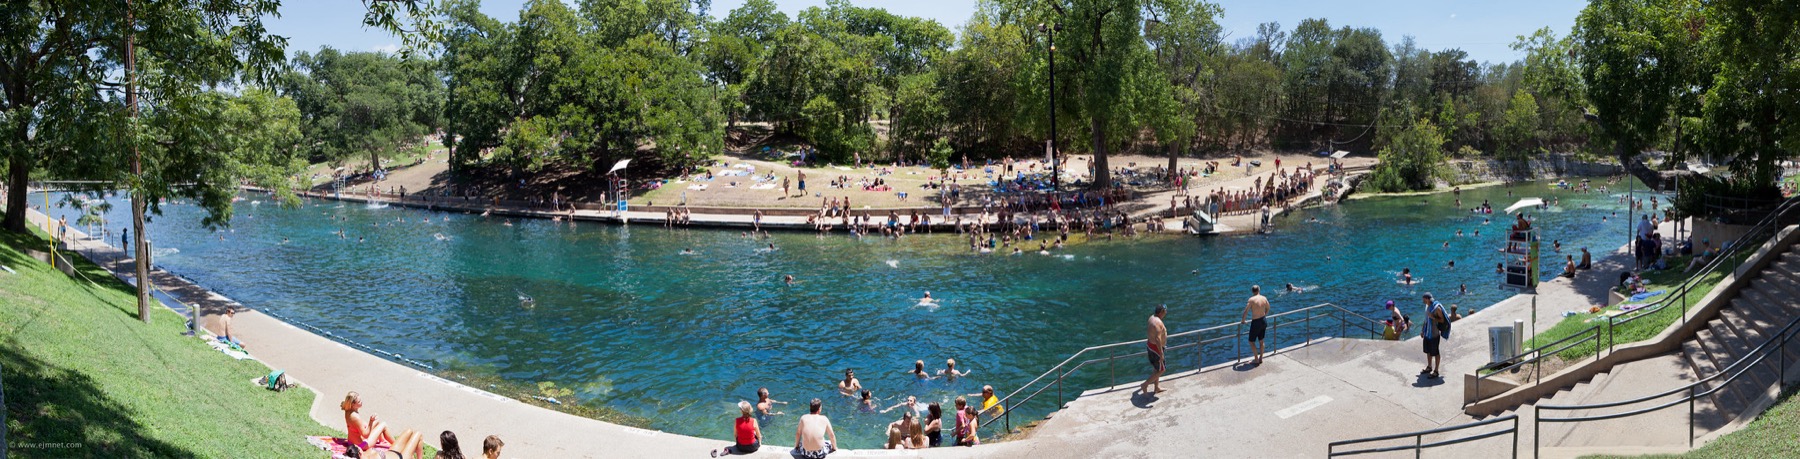 Barton Springs Pool à Austin.